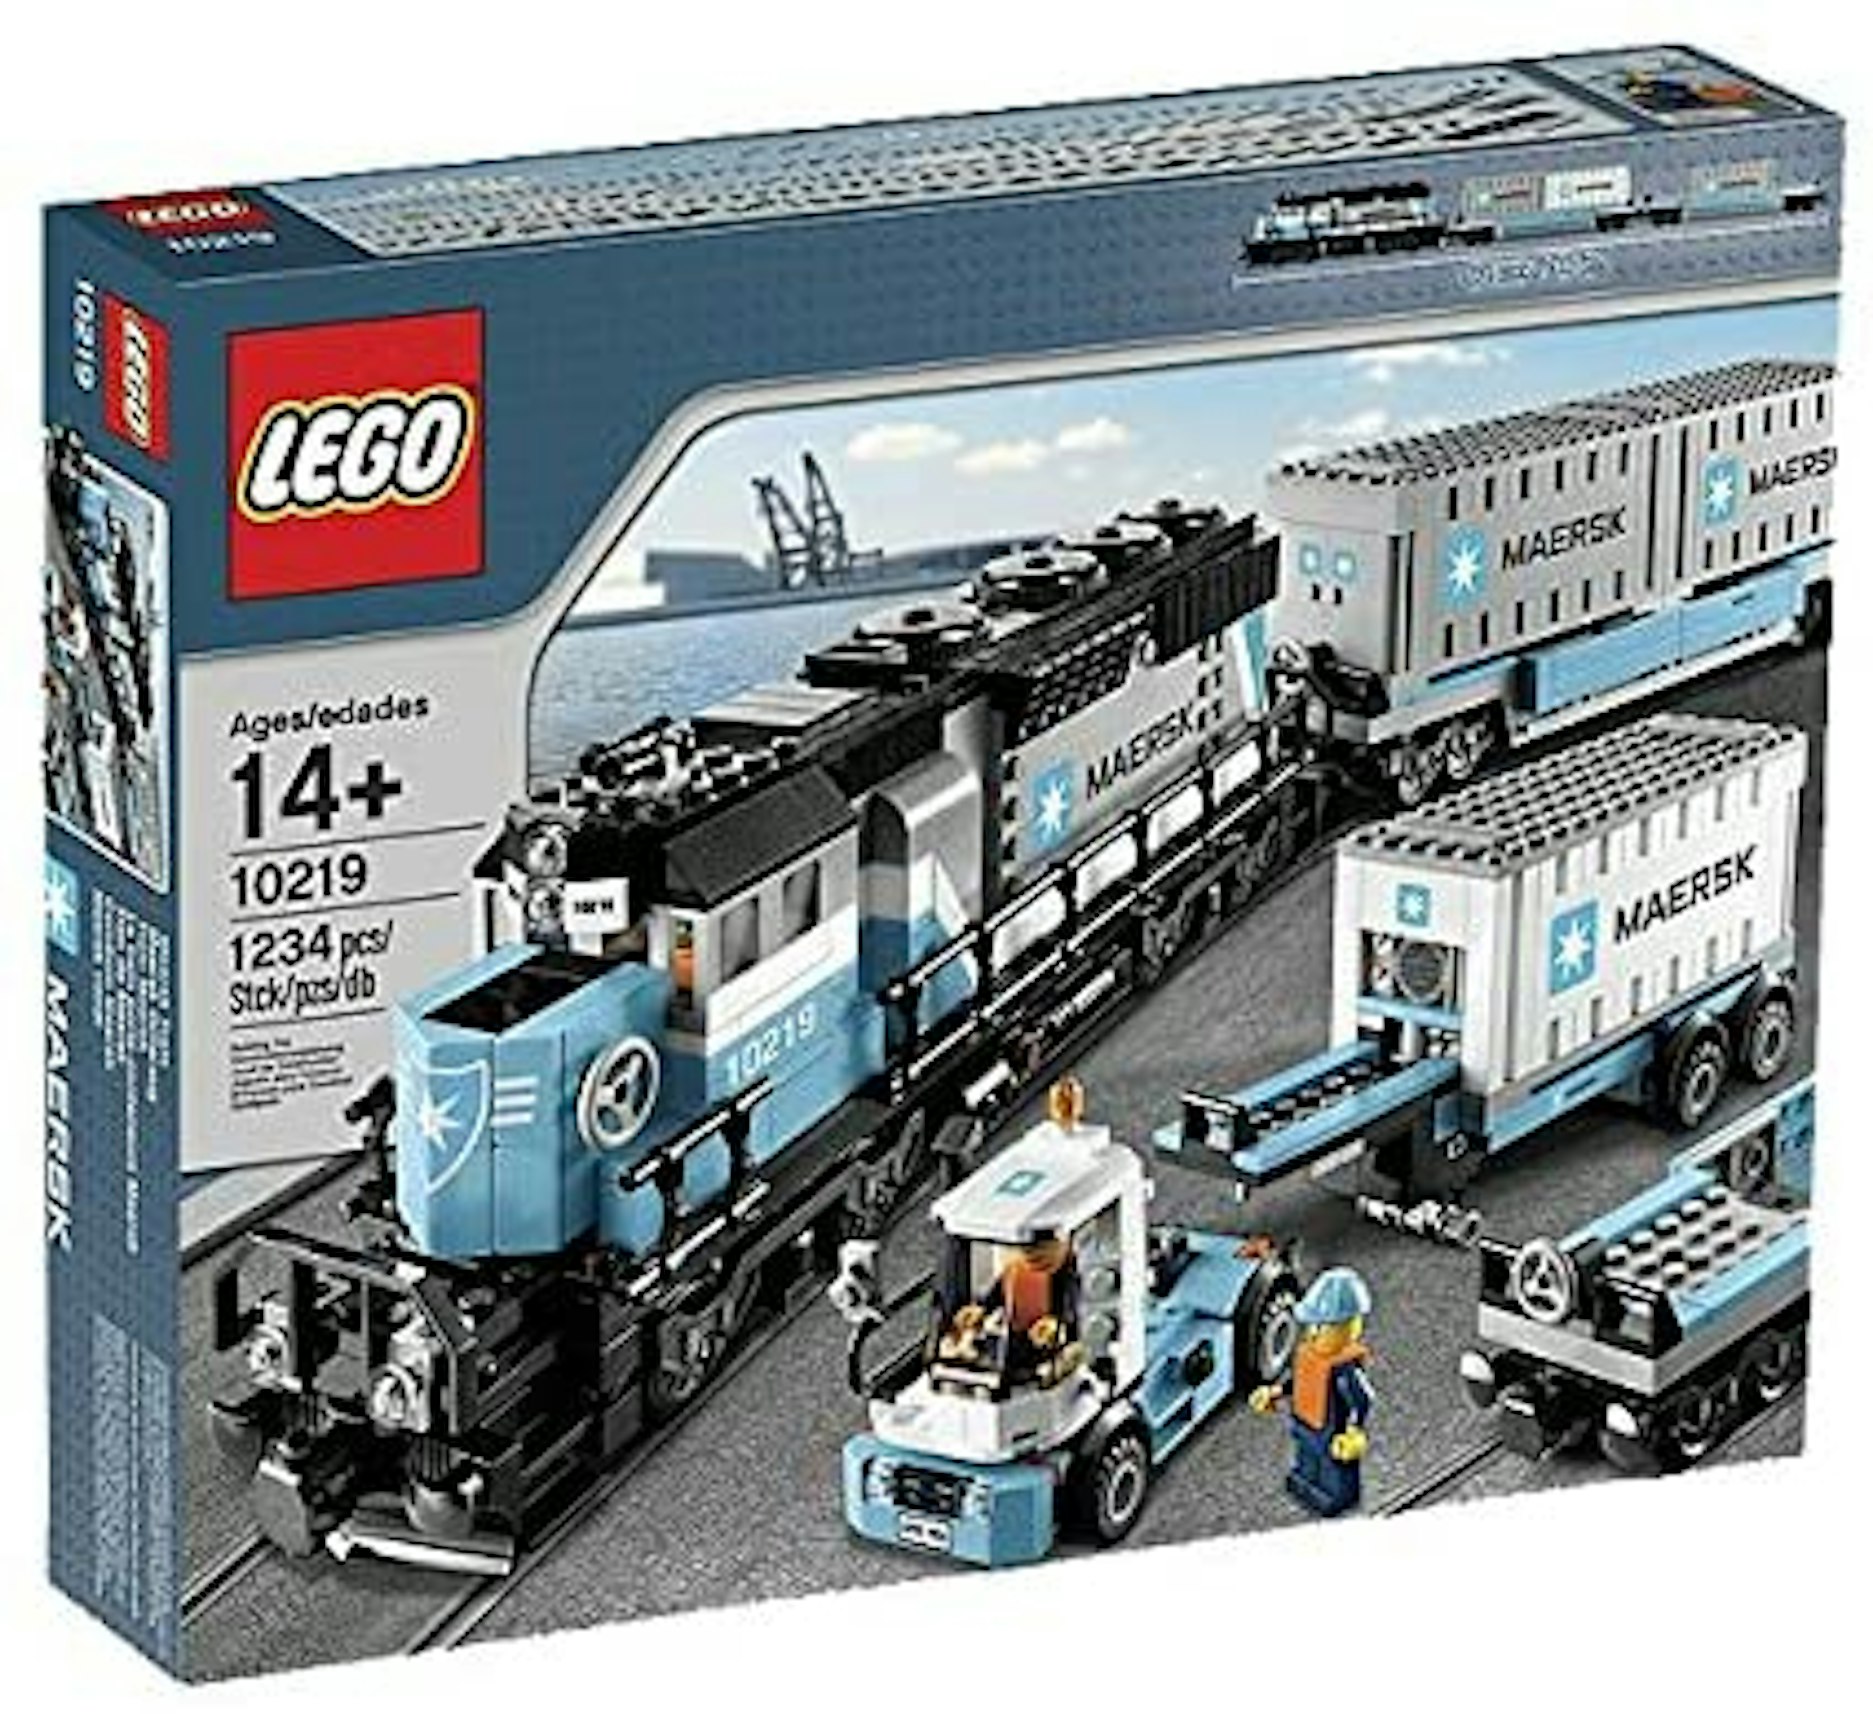 LEGO Creator Maersk Train Set 10219 -